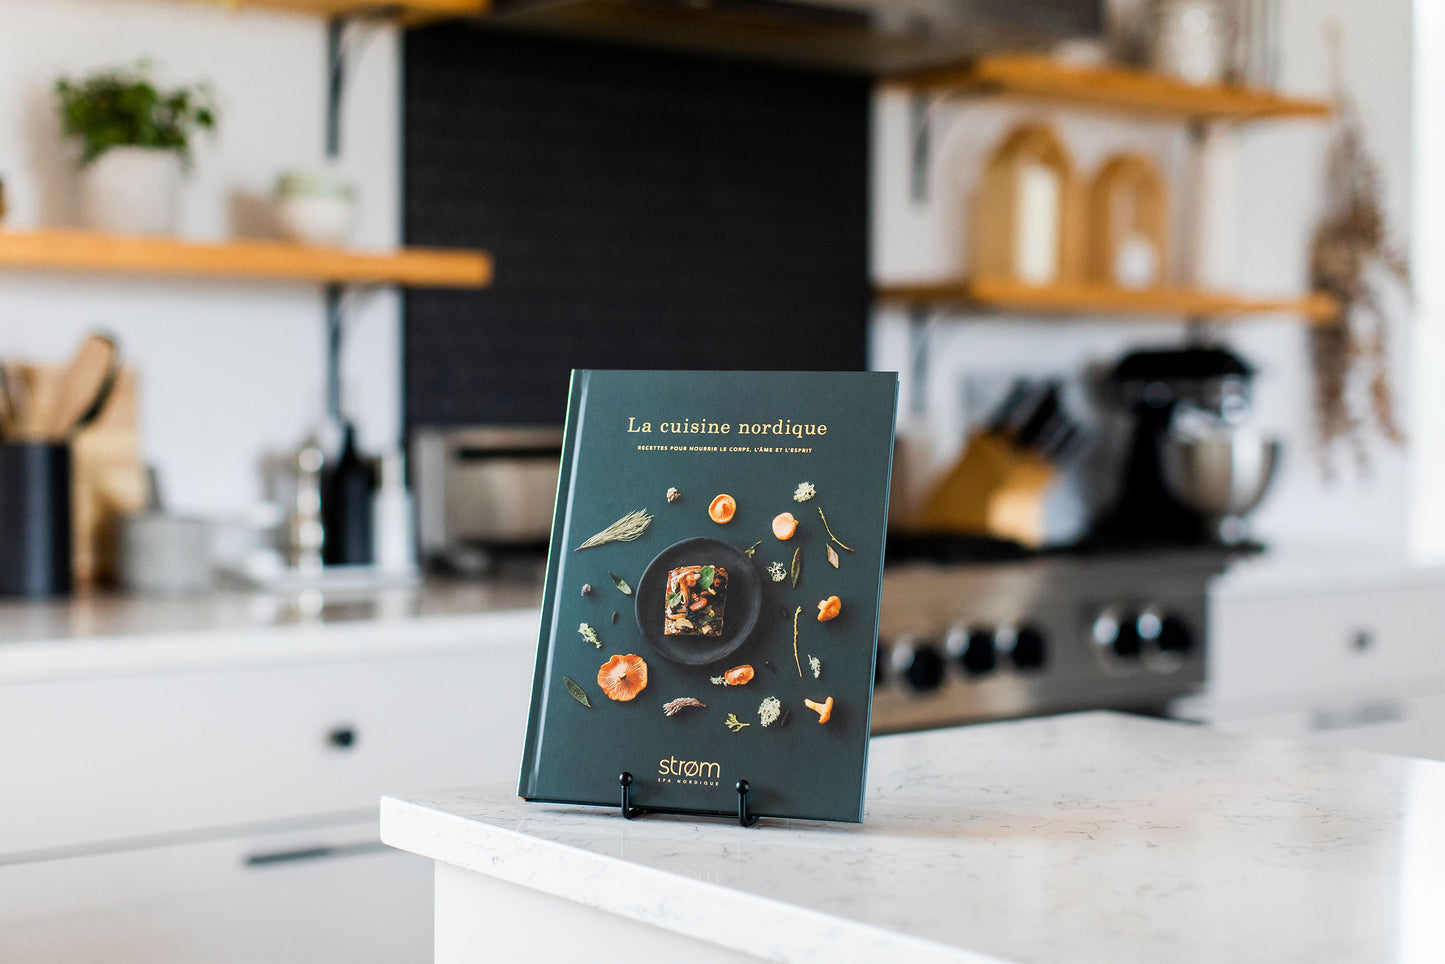 "La cuisine nordique" cookbook